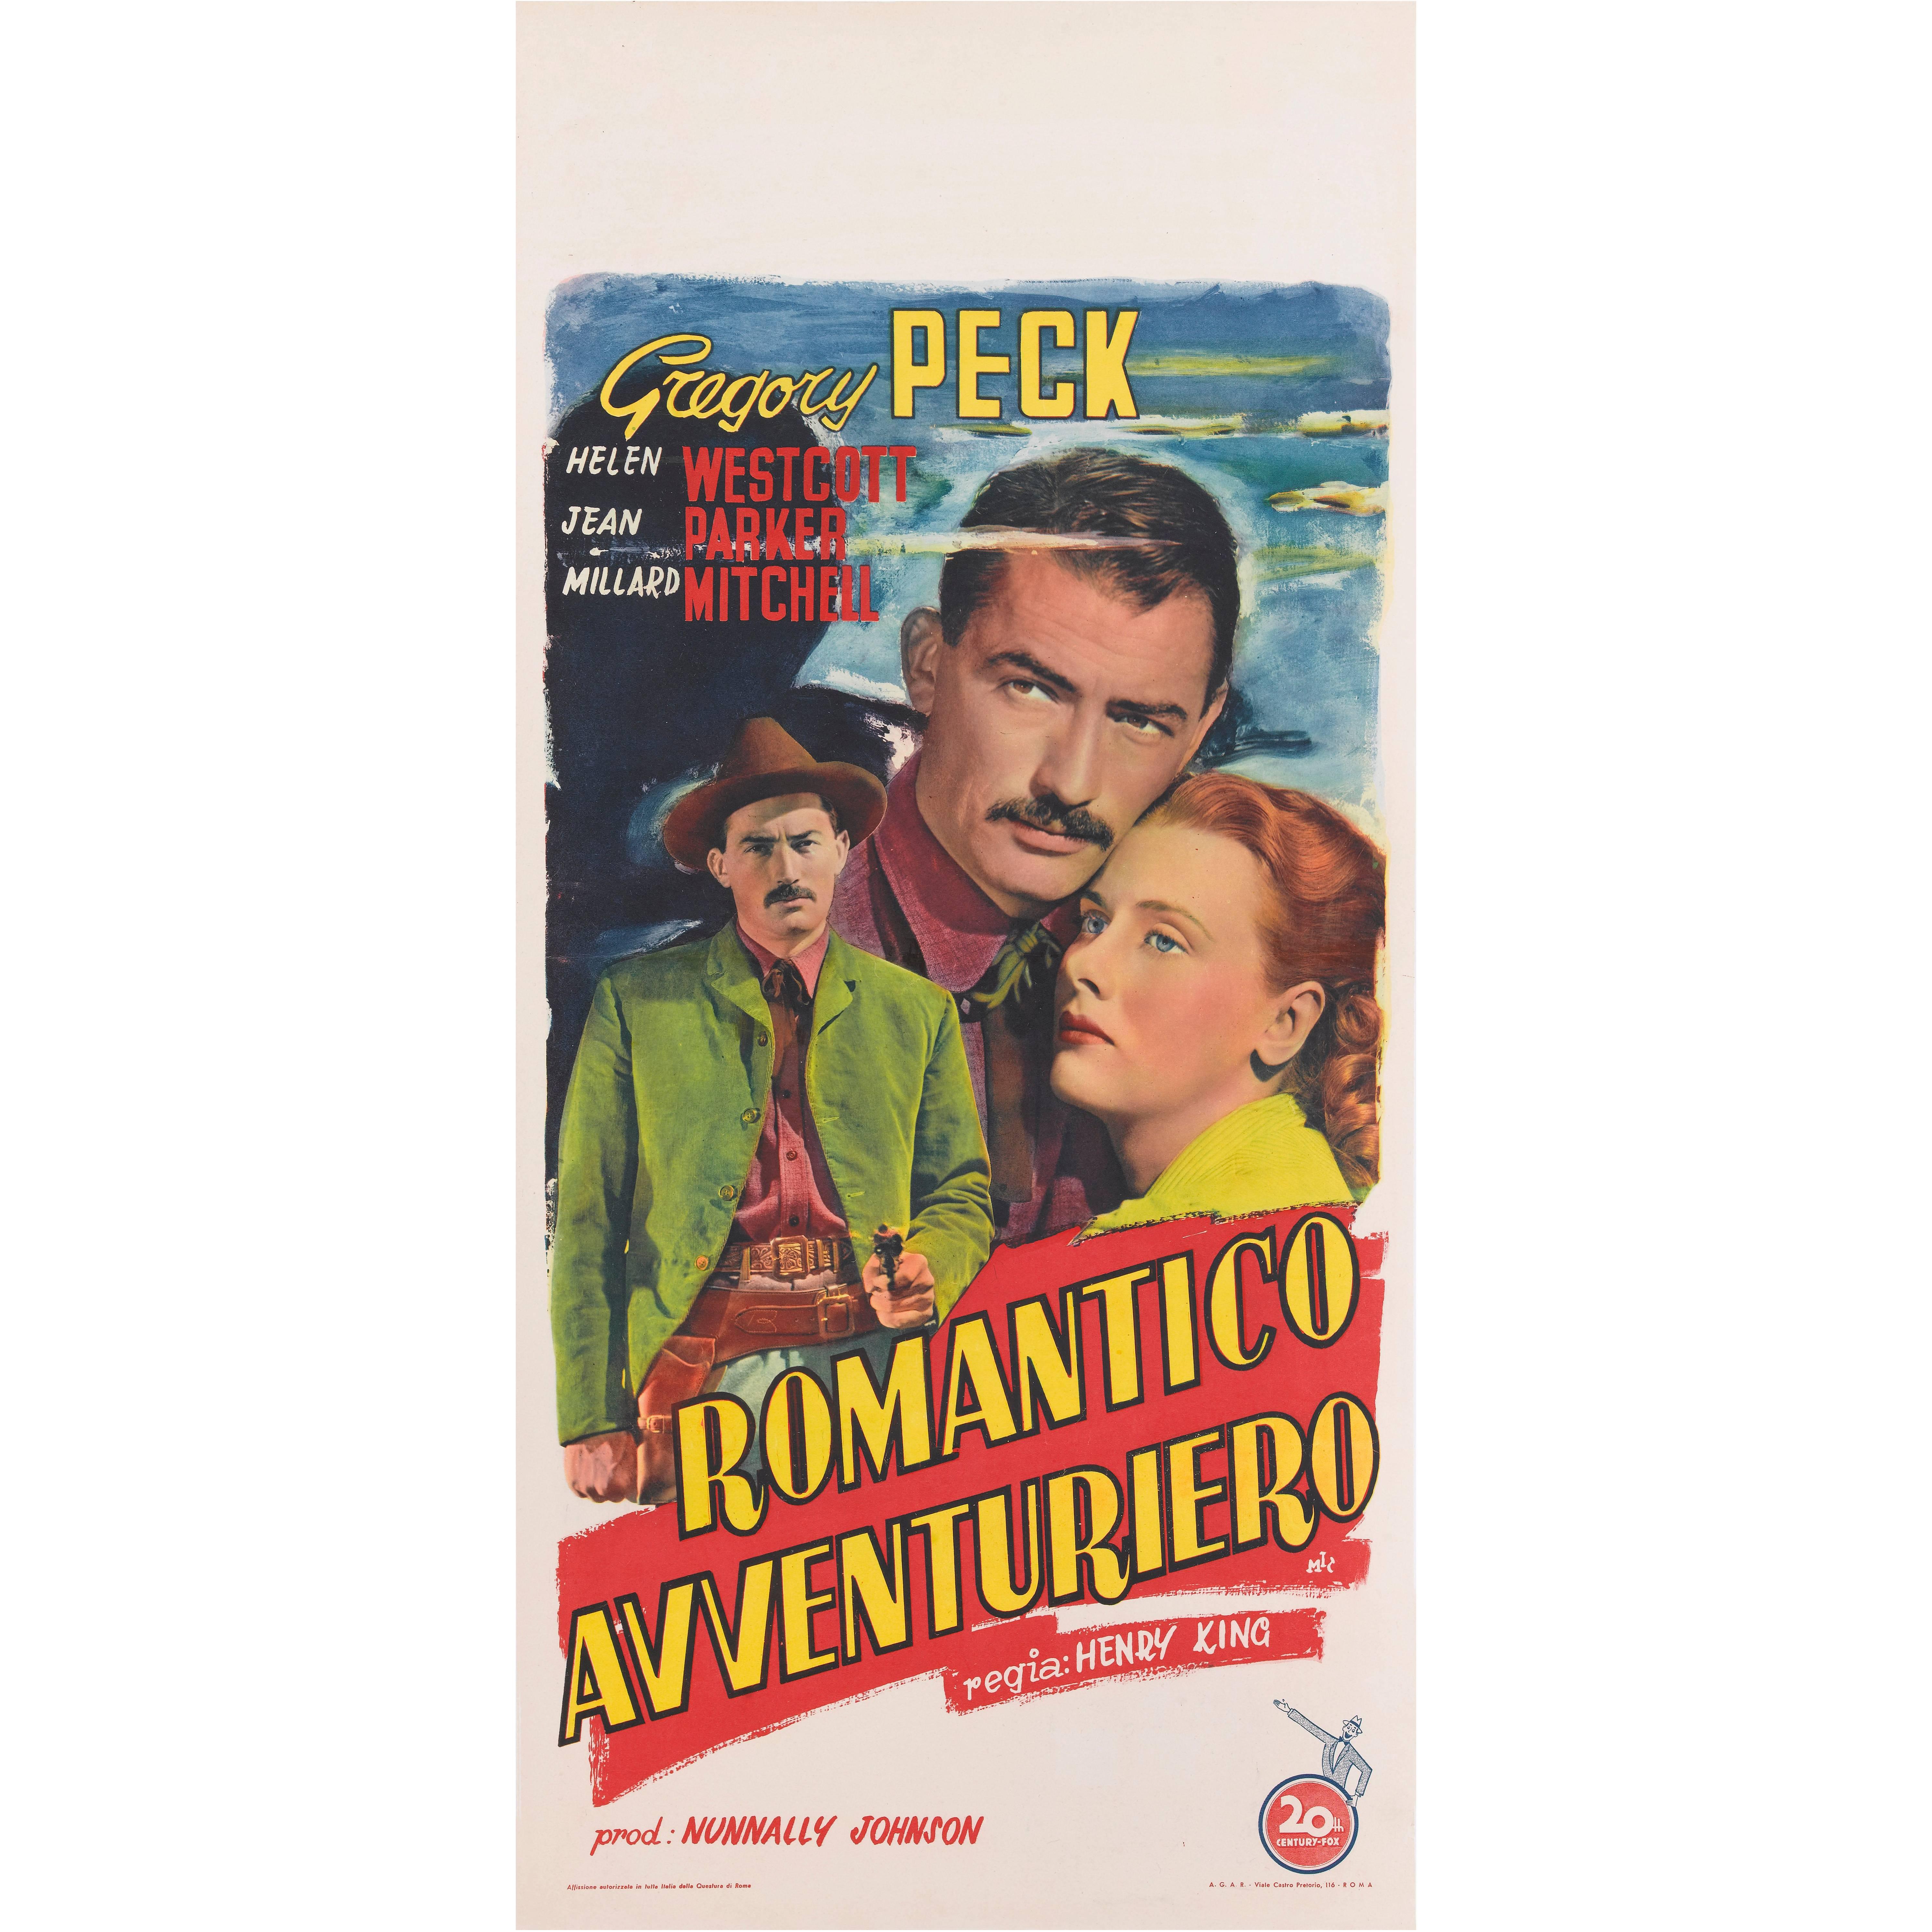 "The Gunfighter / Romantico Avventuriero" Original Italian Movie Poster